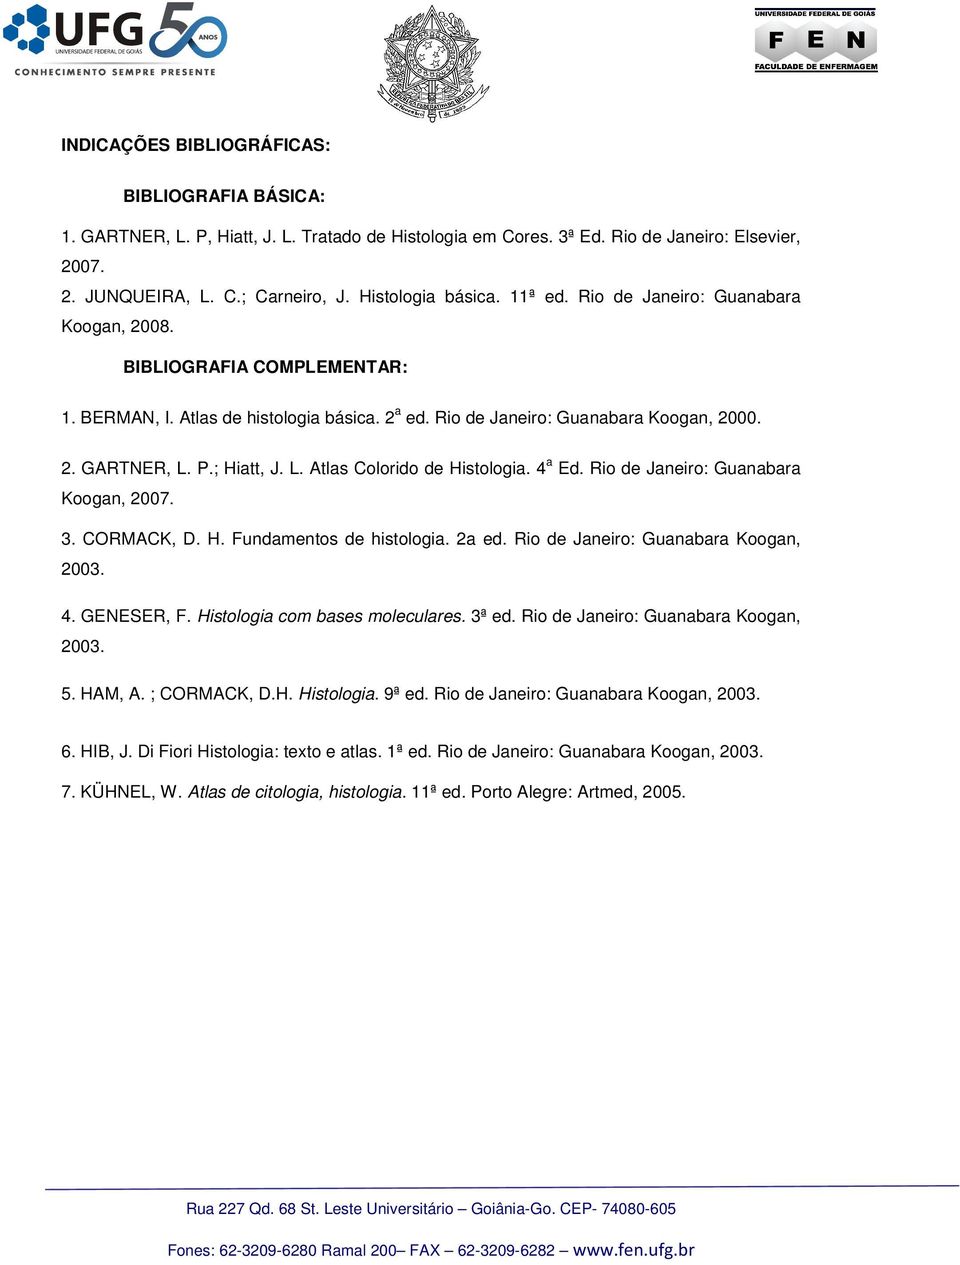 P.; Hiatt, J. L. Atlas Colorido de Histologia. 4 a Ed. Rio de Janeiro: Guanabara Koogan, 2007. 3. CORMACK, D. H. Fundamentos de histologia. 2a ed. Rio de Janeiro: Guanabara Koogan, 2003. 4. GENESER, F.